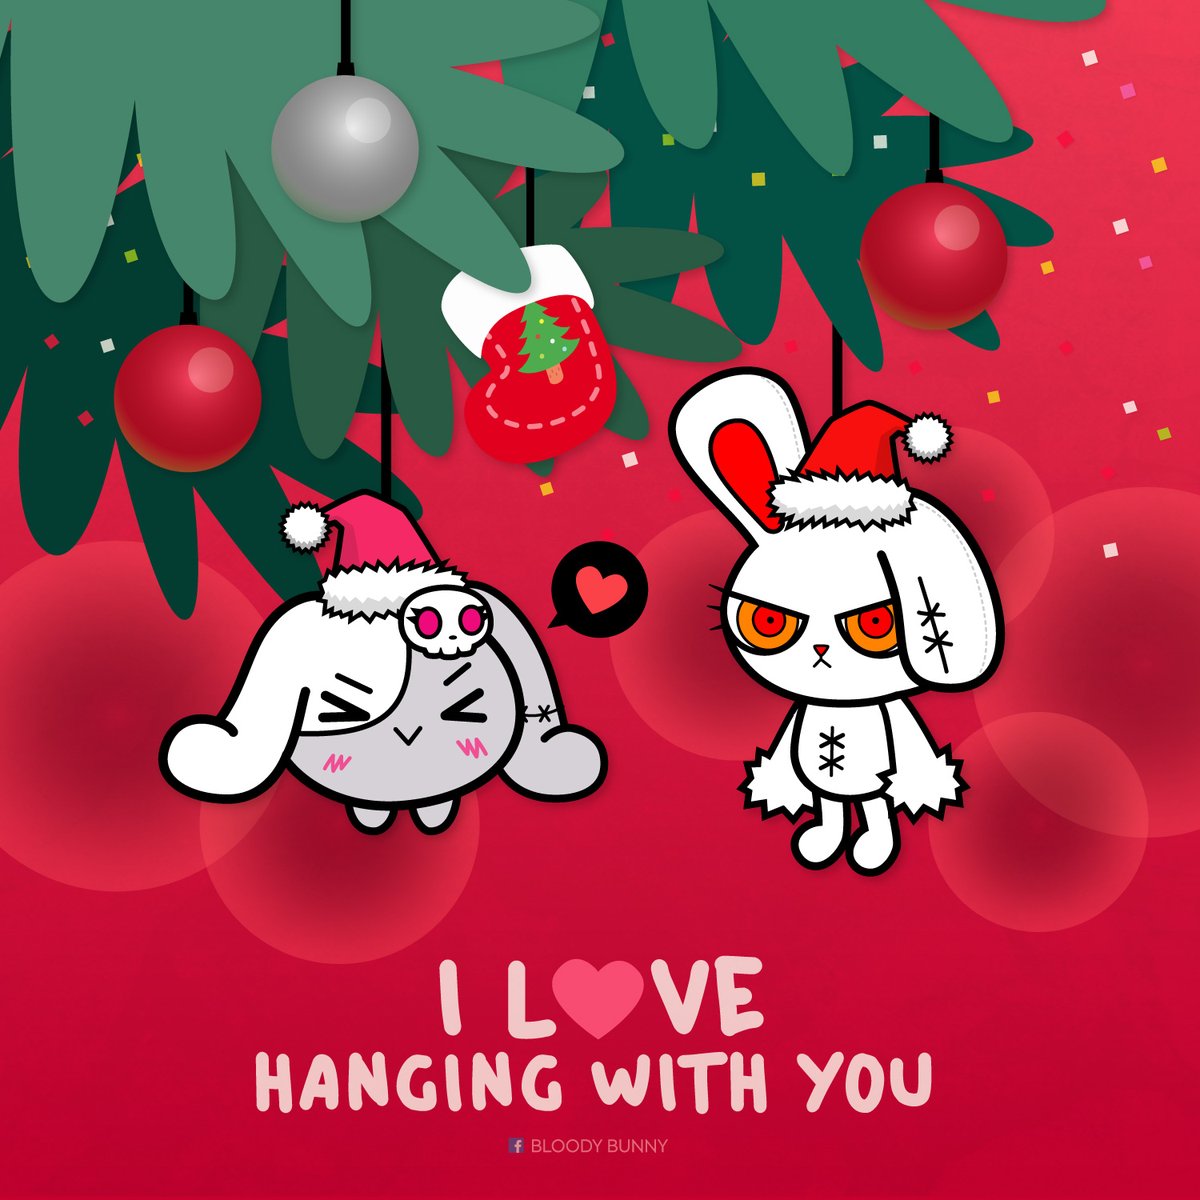 I L♥️VE hanging with you 💕  #bloodybunny #2spotstudio #character #bunny #characterart #characterdesign  #life #love #quote  #Santa #xmas #merryXmas